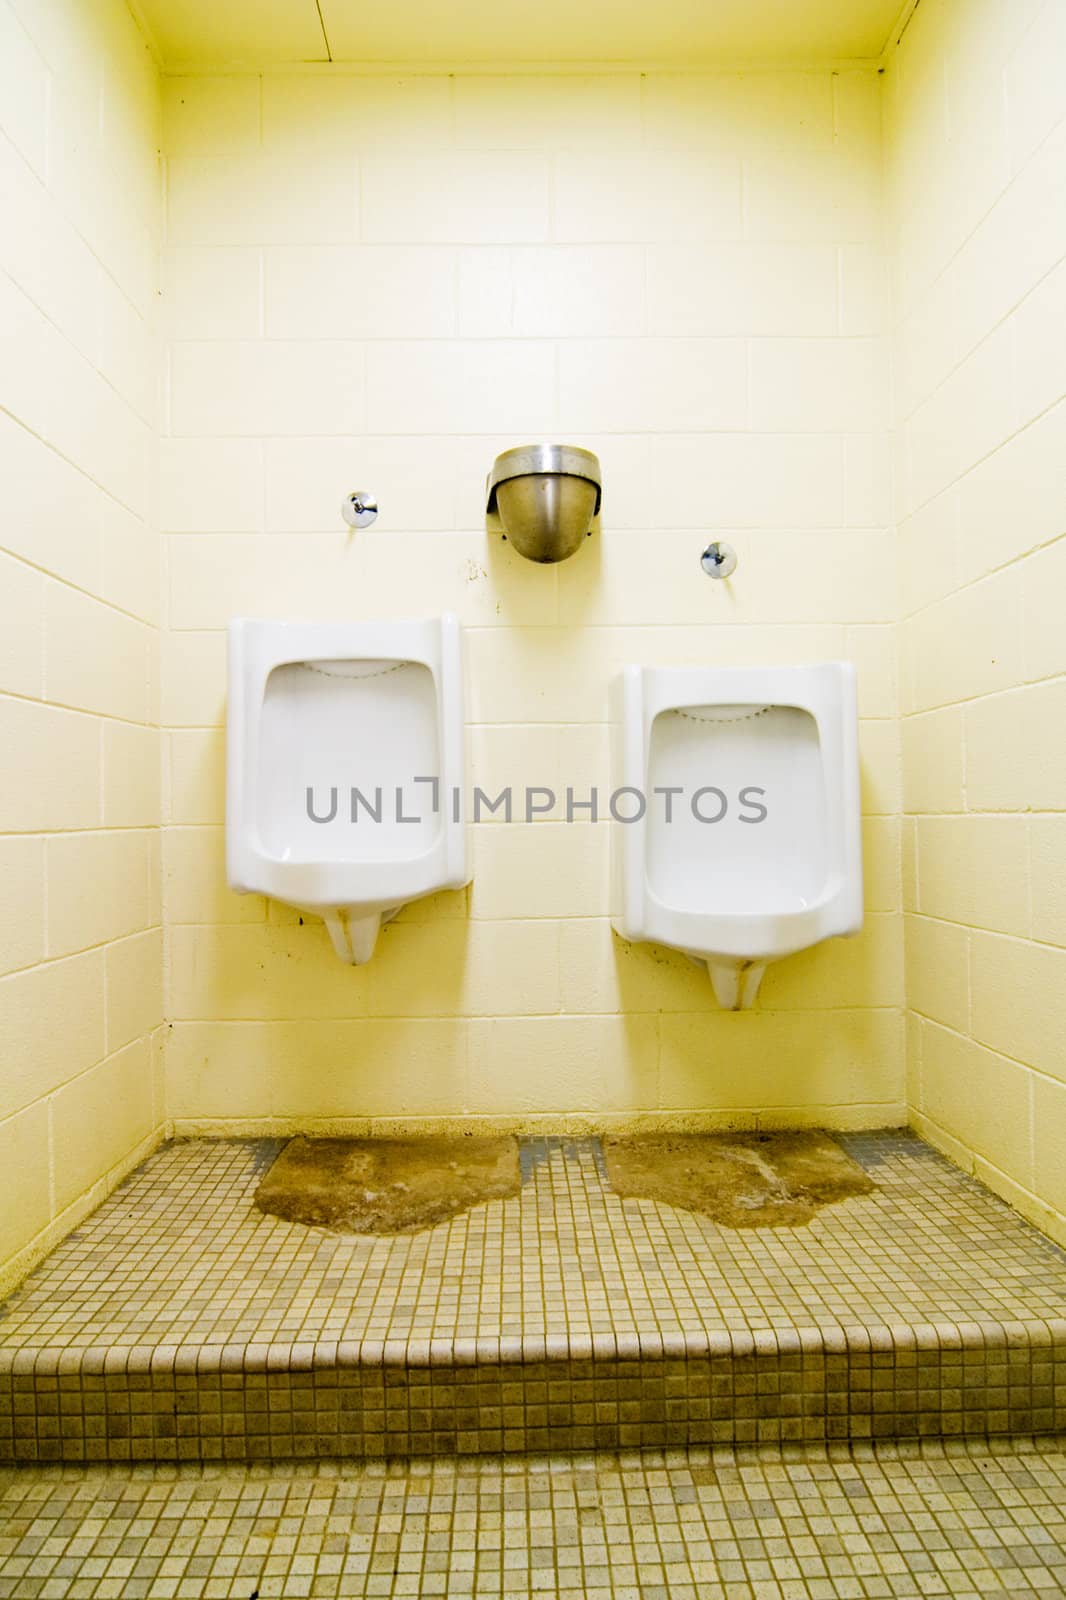 Urinal in a public bathroom